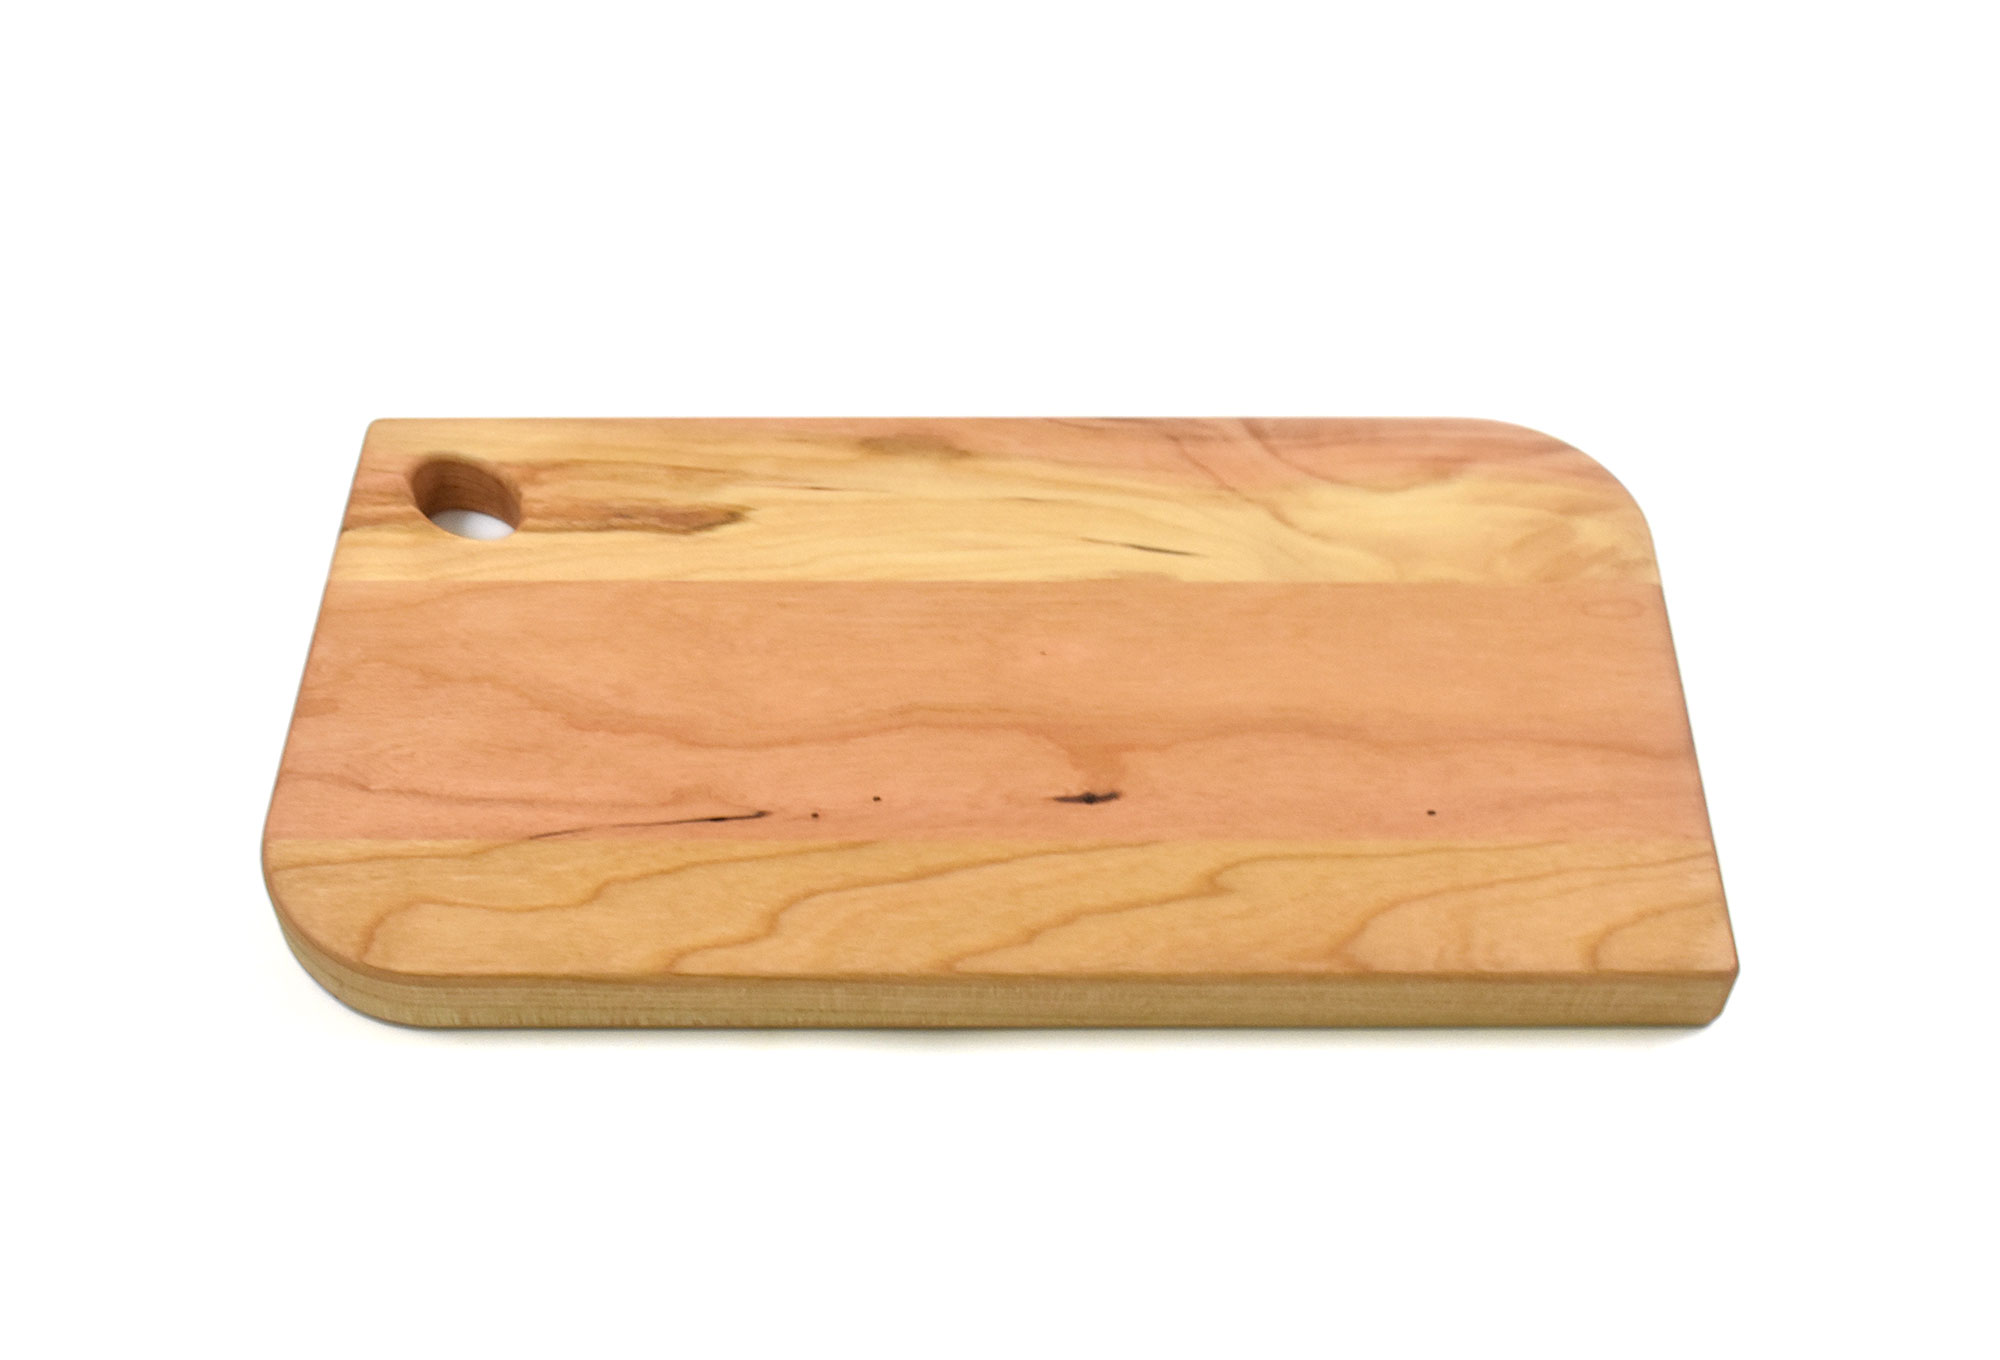 Small rectangular charcuterie board